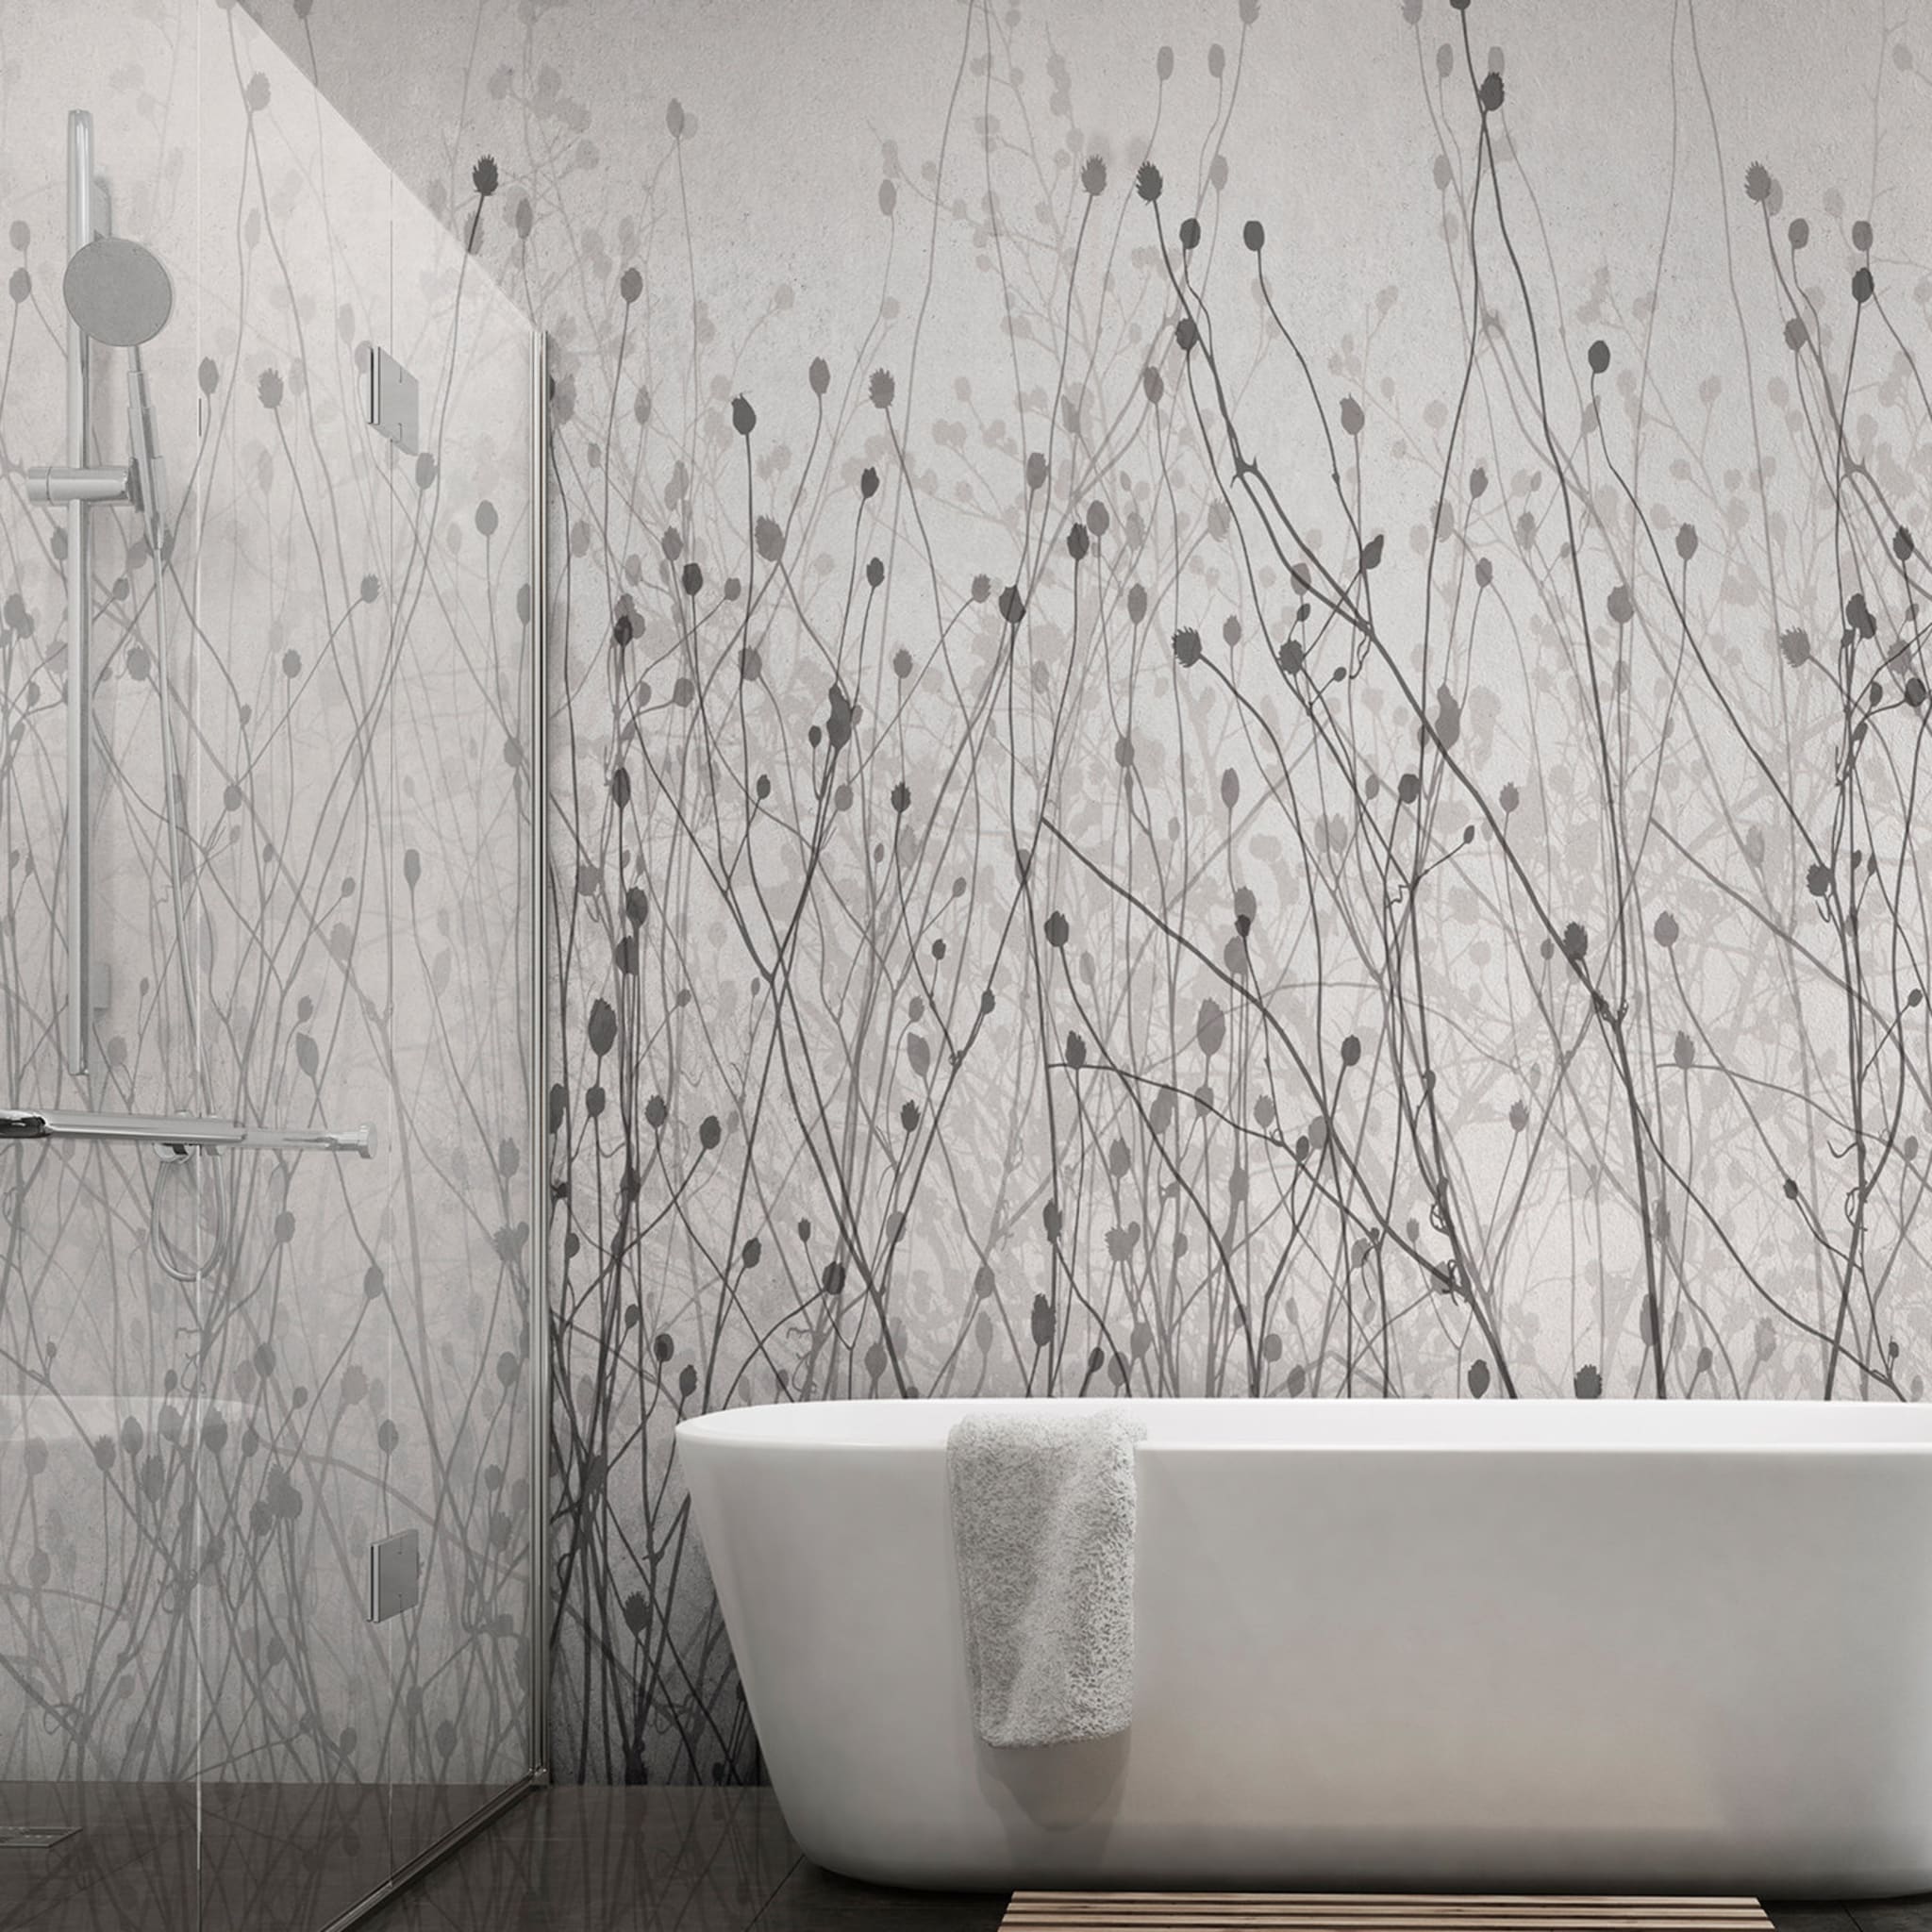 Gray Flowers Textured Wallpaper - Alternative view 1